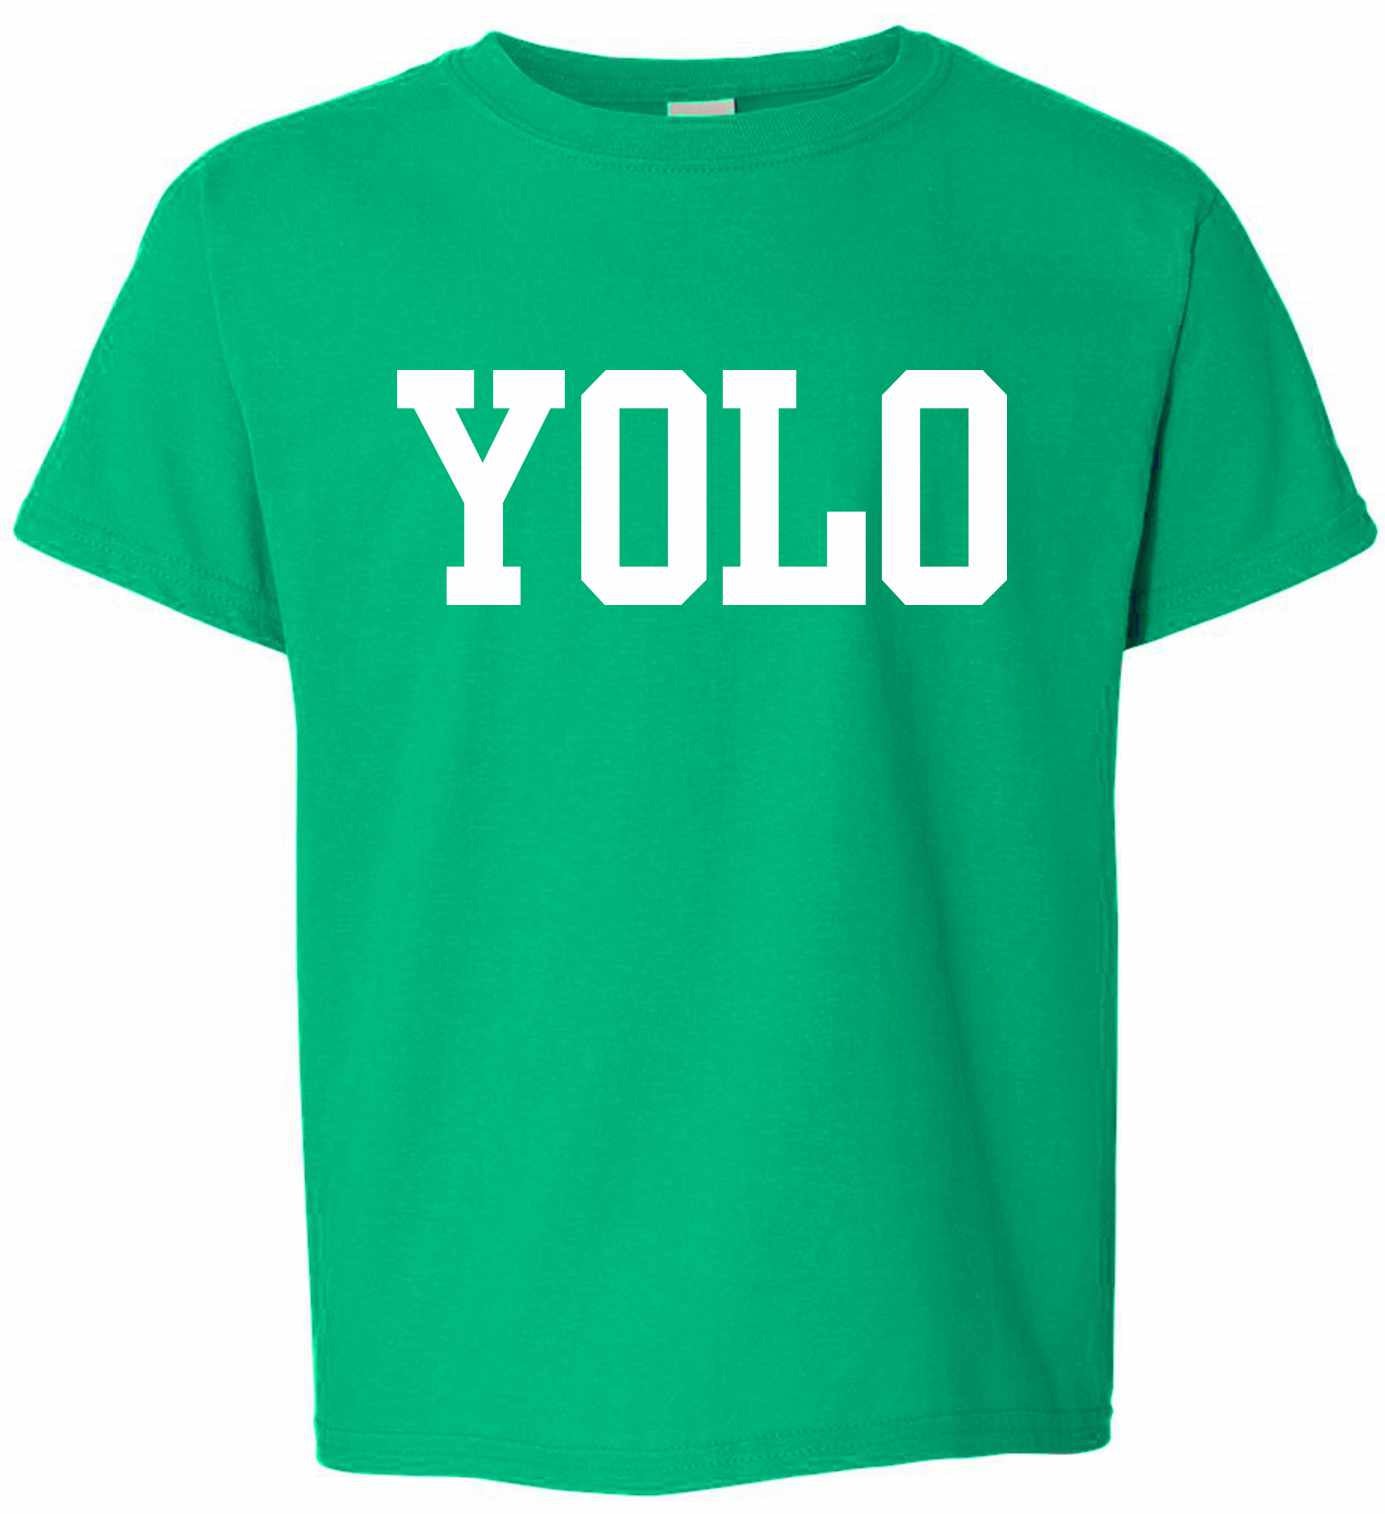 YOLO on Kids T-Shirt